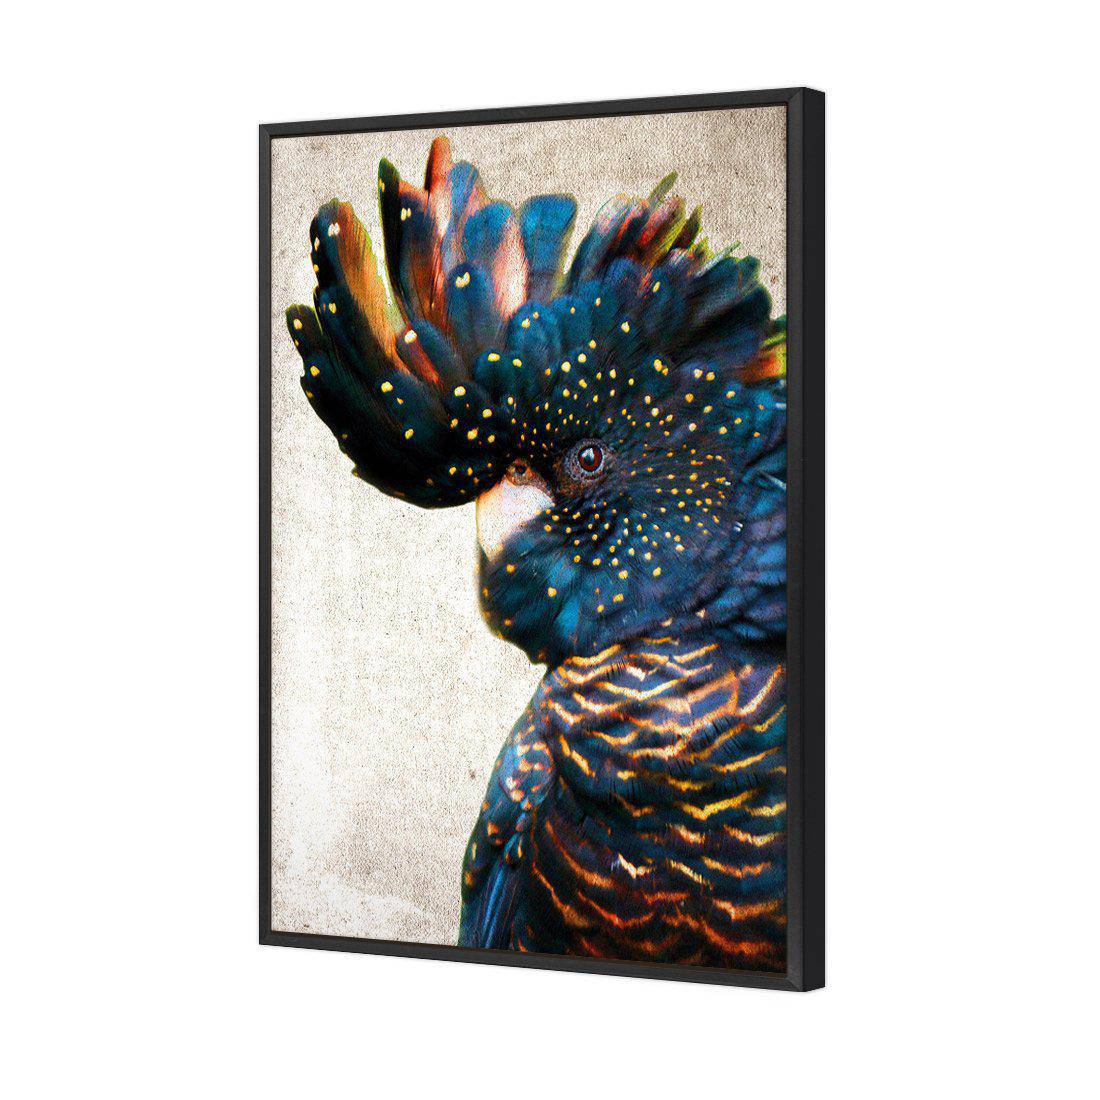 Black Cockatoo Side, Grunge Canvas Art-Canvas-Wall Art Designs-45x30cm-Canvas - Black Frame-Wall Art Designs